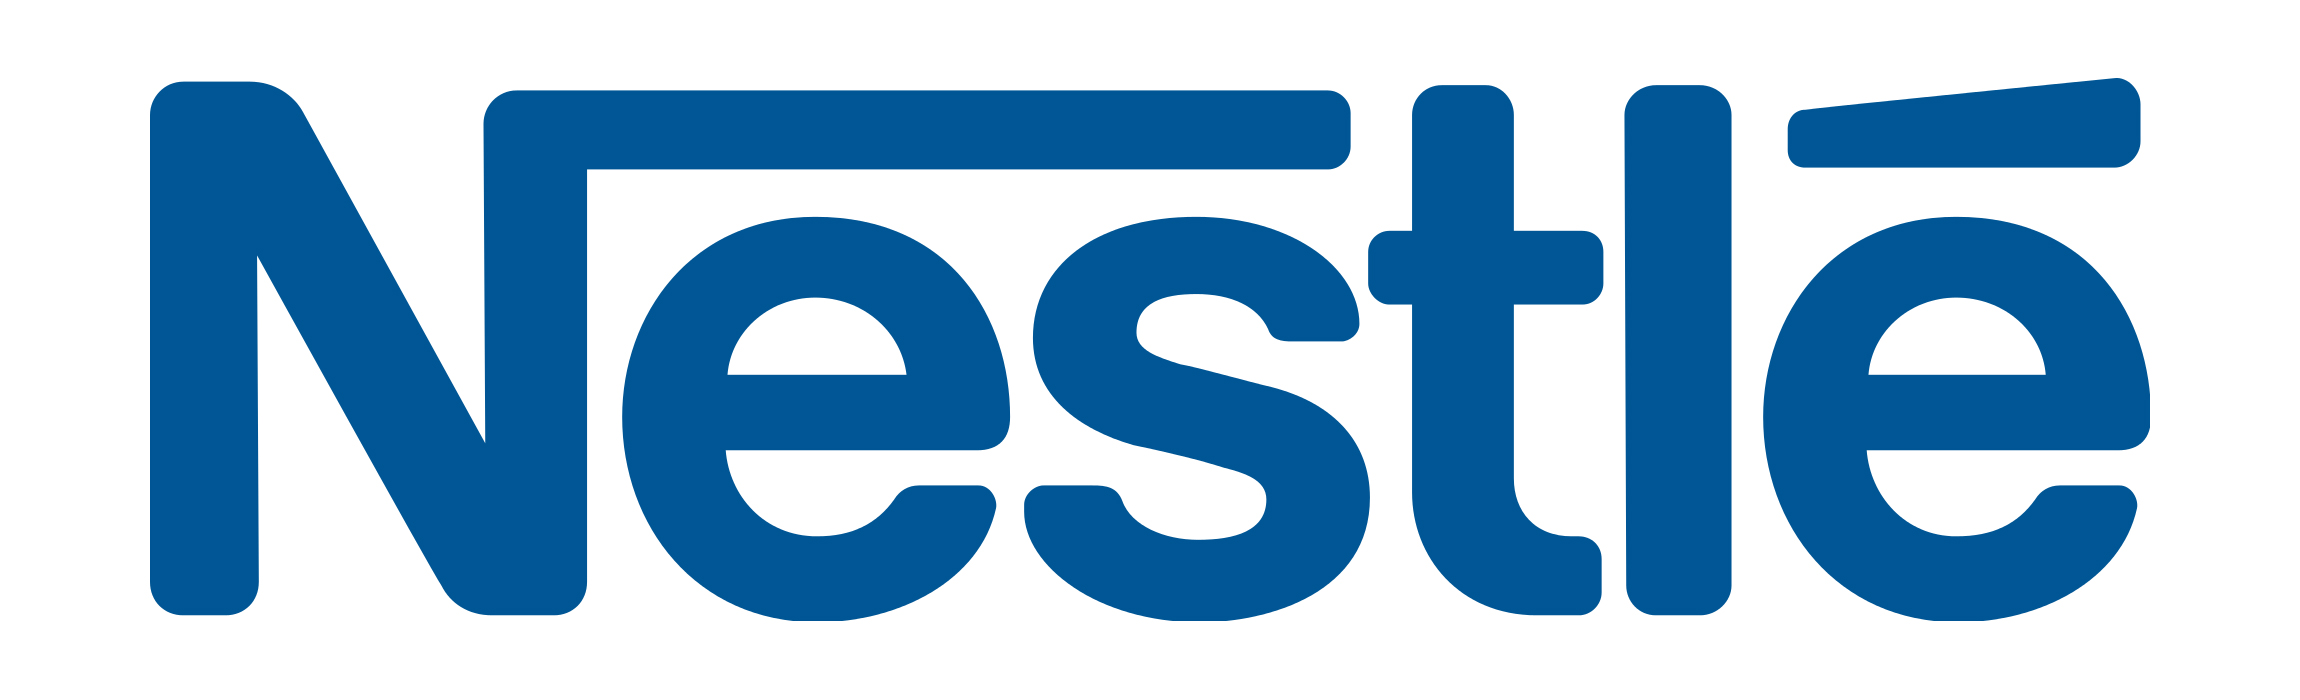 Font Of The Nestle Logo - Nestle, Transparent background PNG HD thumbnail